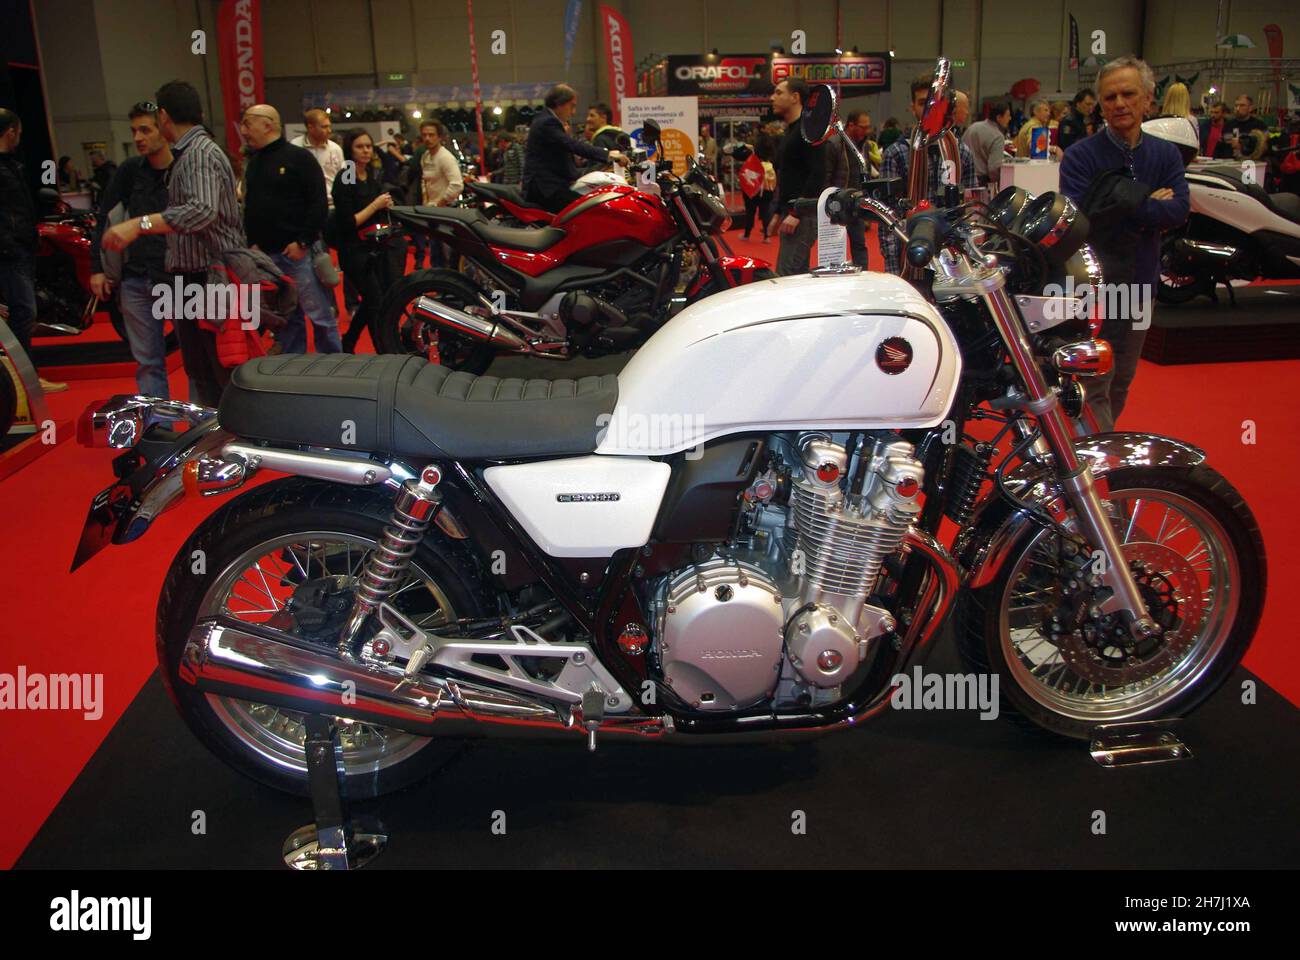 Nuova moto classica giapponese: Honda CB 1100 Foto Stock